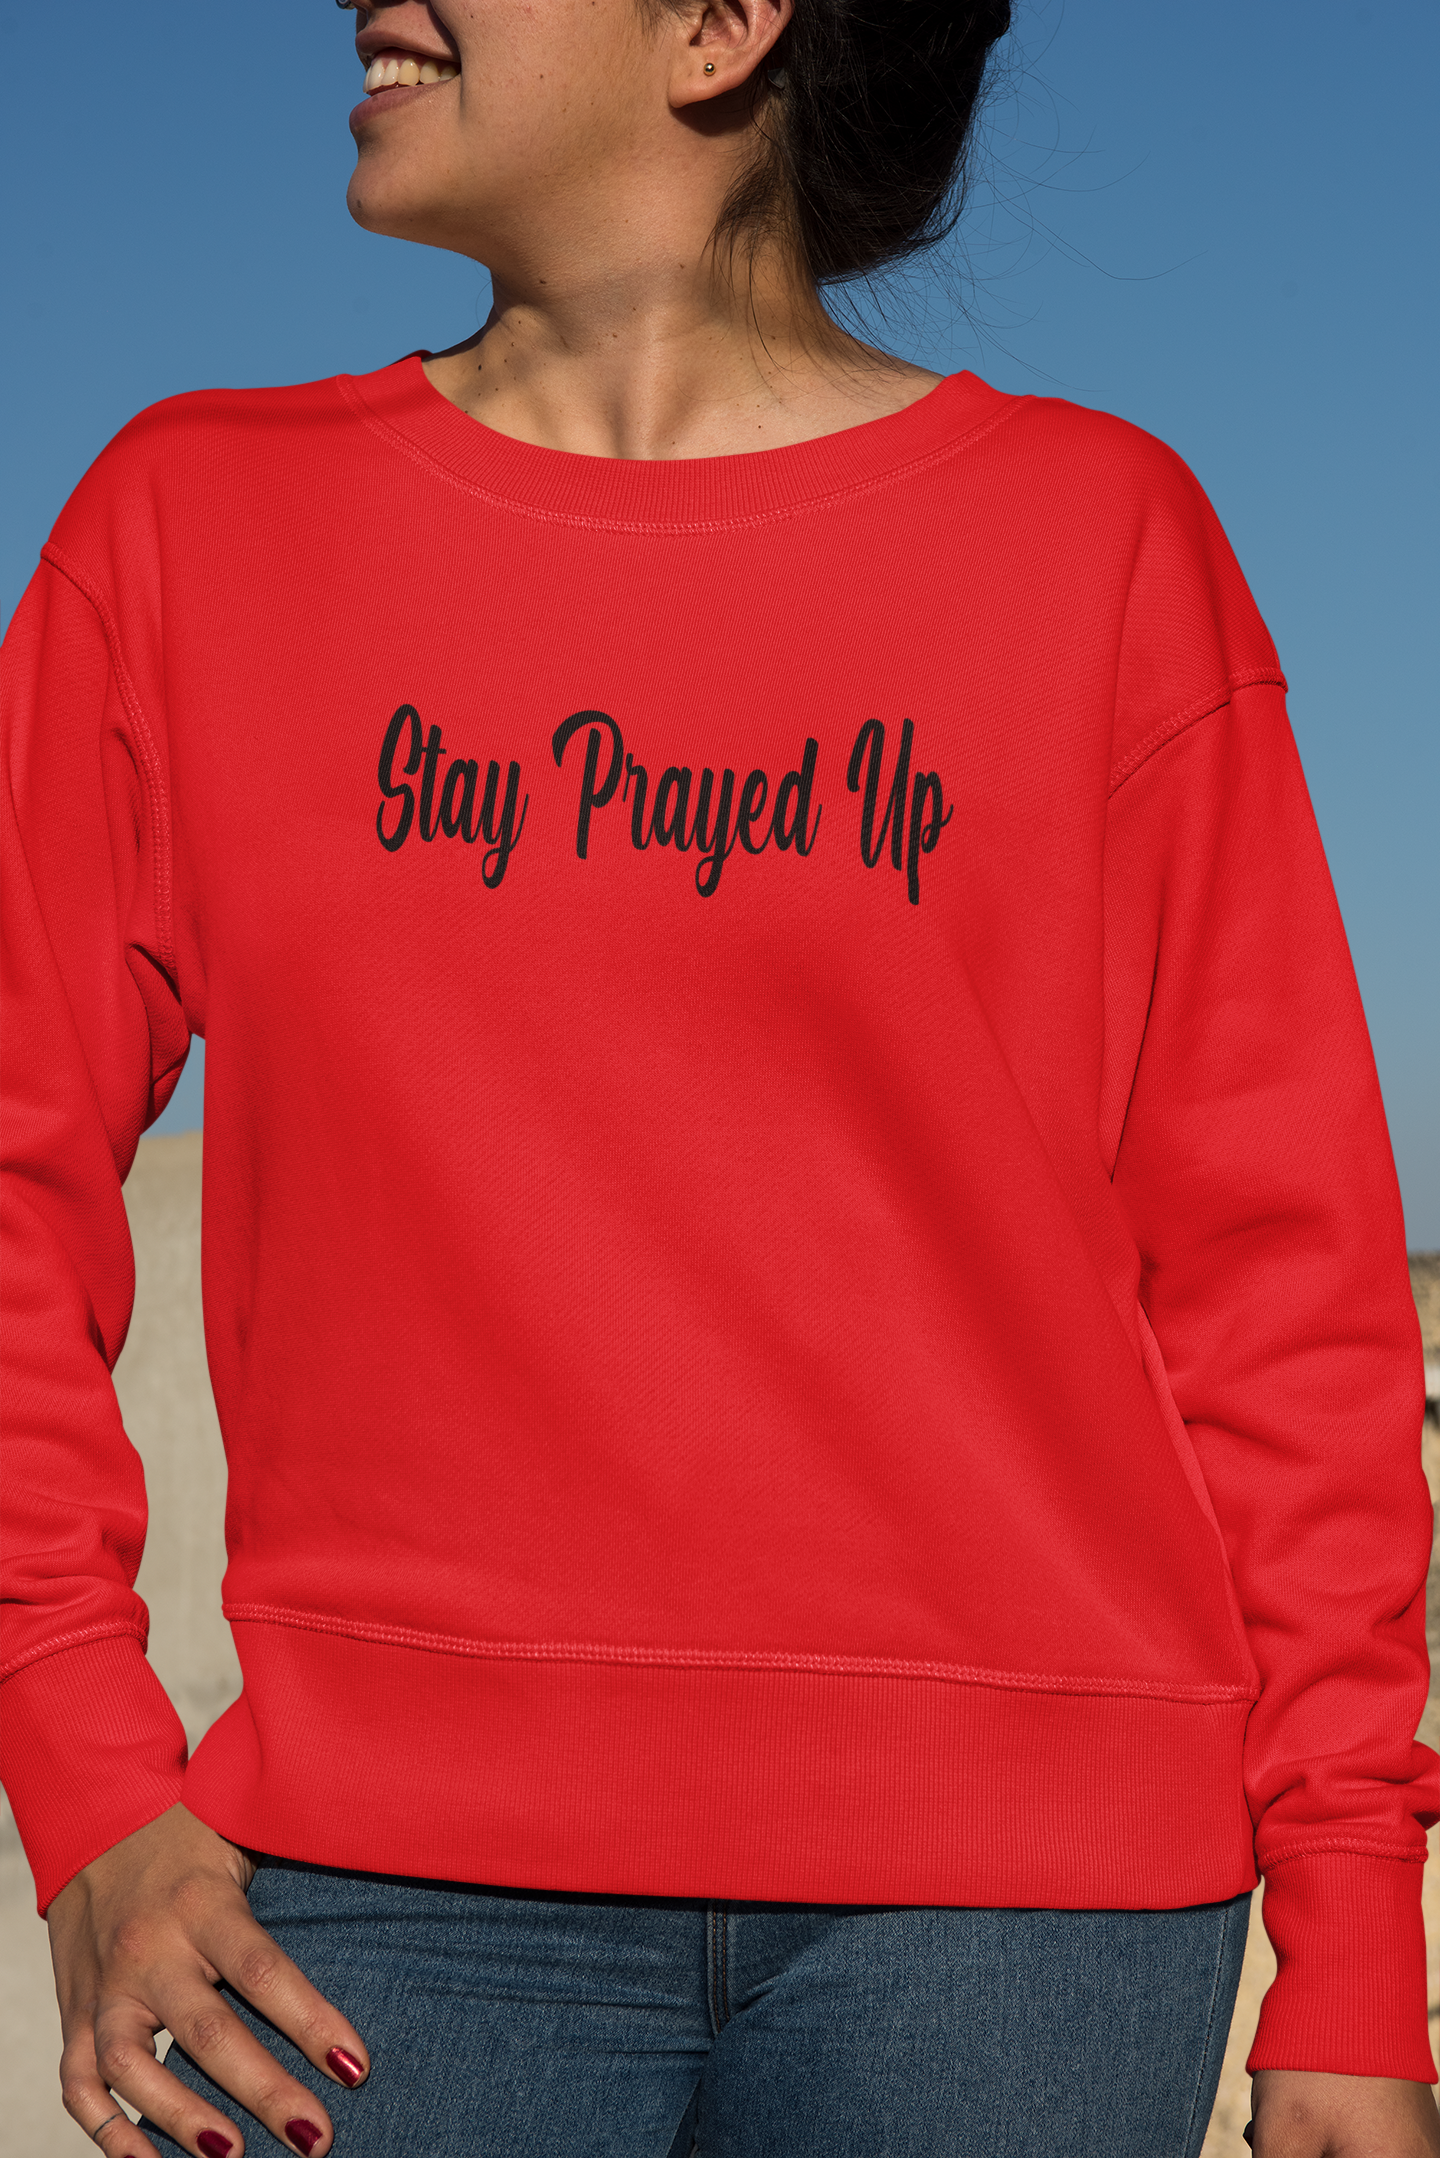 Stay Prayed Up Sweatshirt